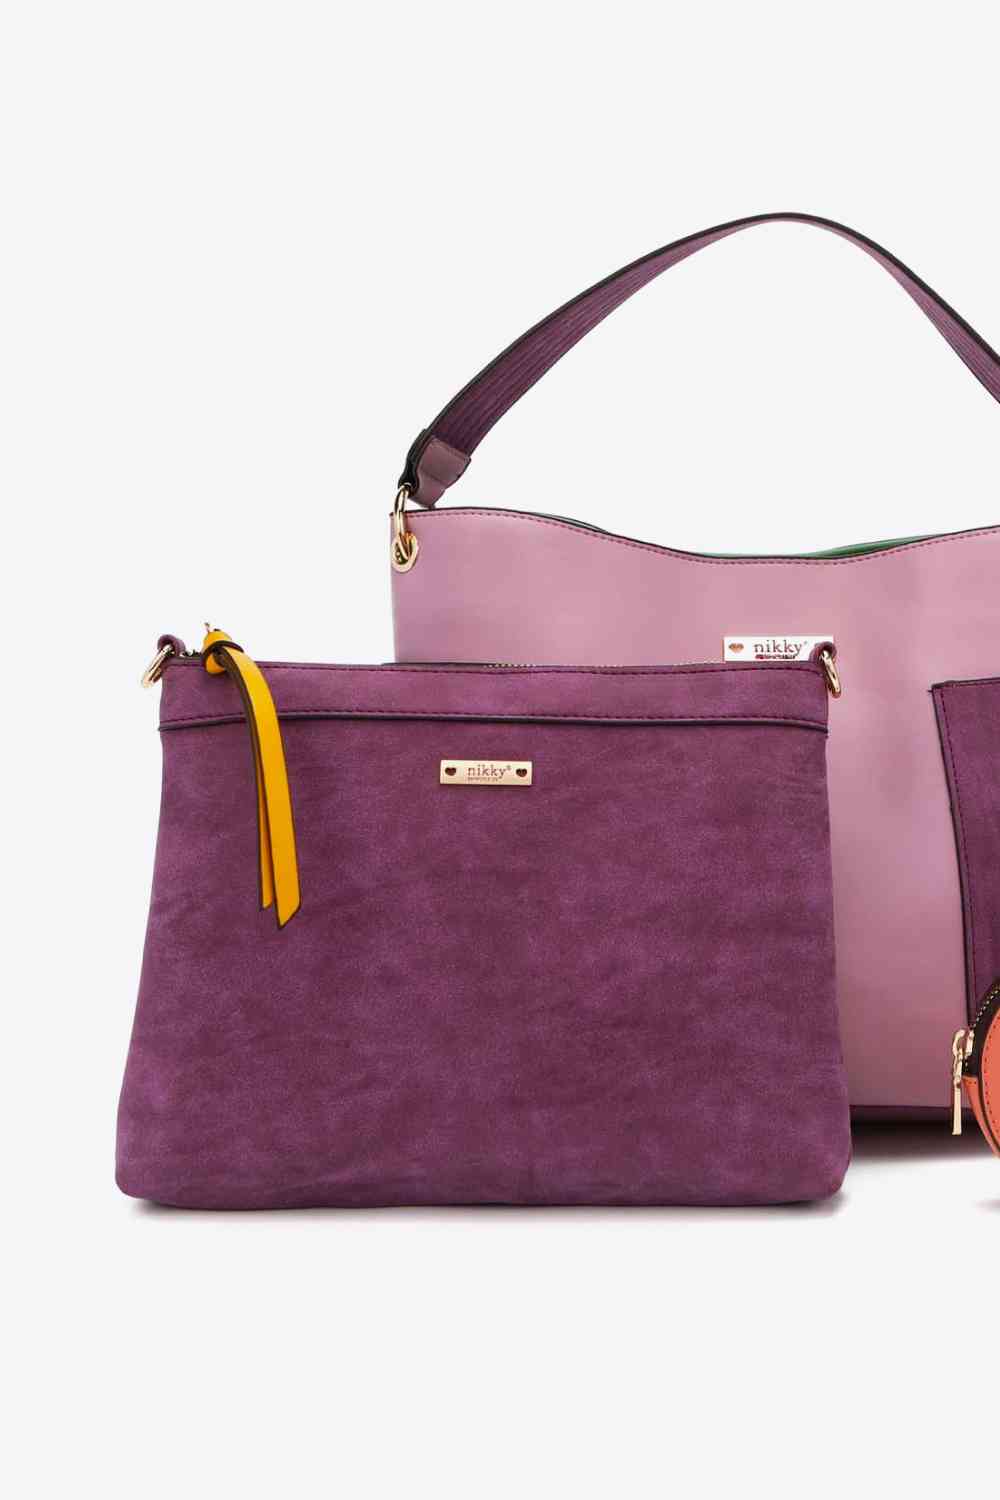 Nicole Lee USA Sweetheart Handbag Set Purpure No 2